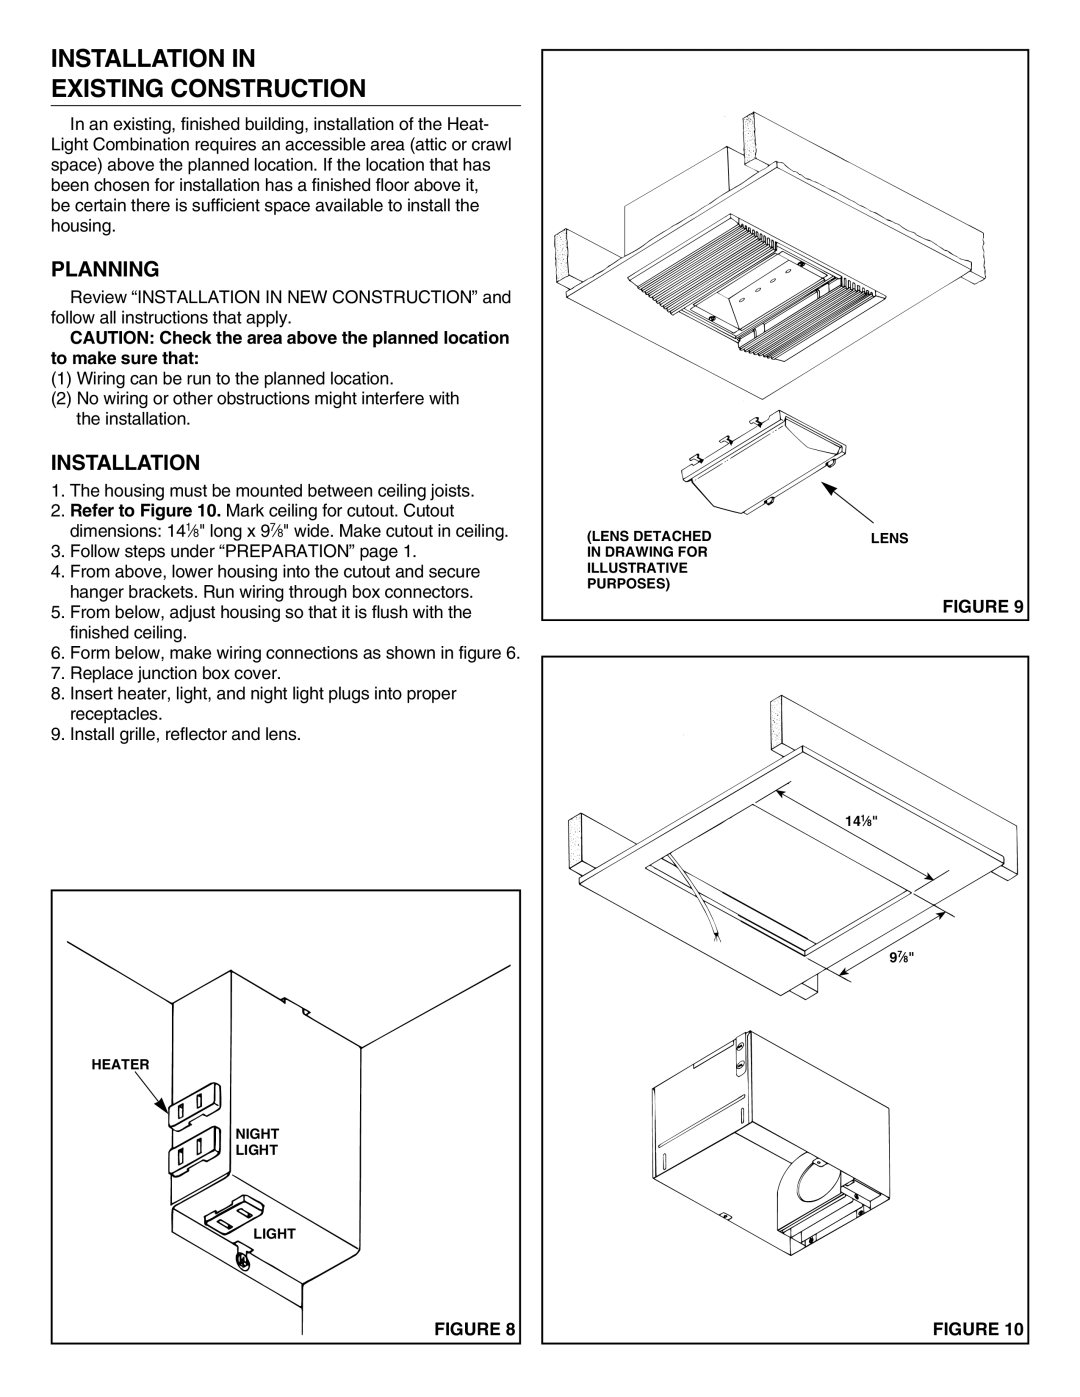 NuTone 9960 installation instructions Installation In Existing Construction, Planning 